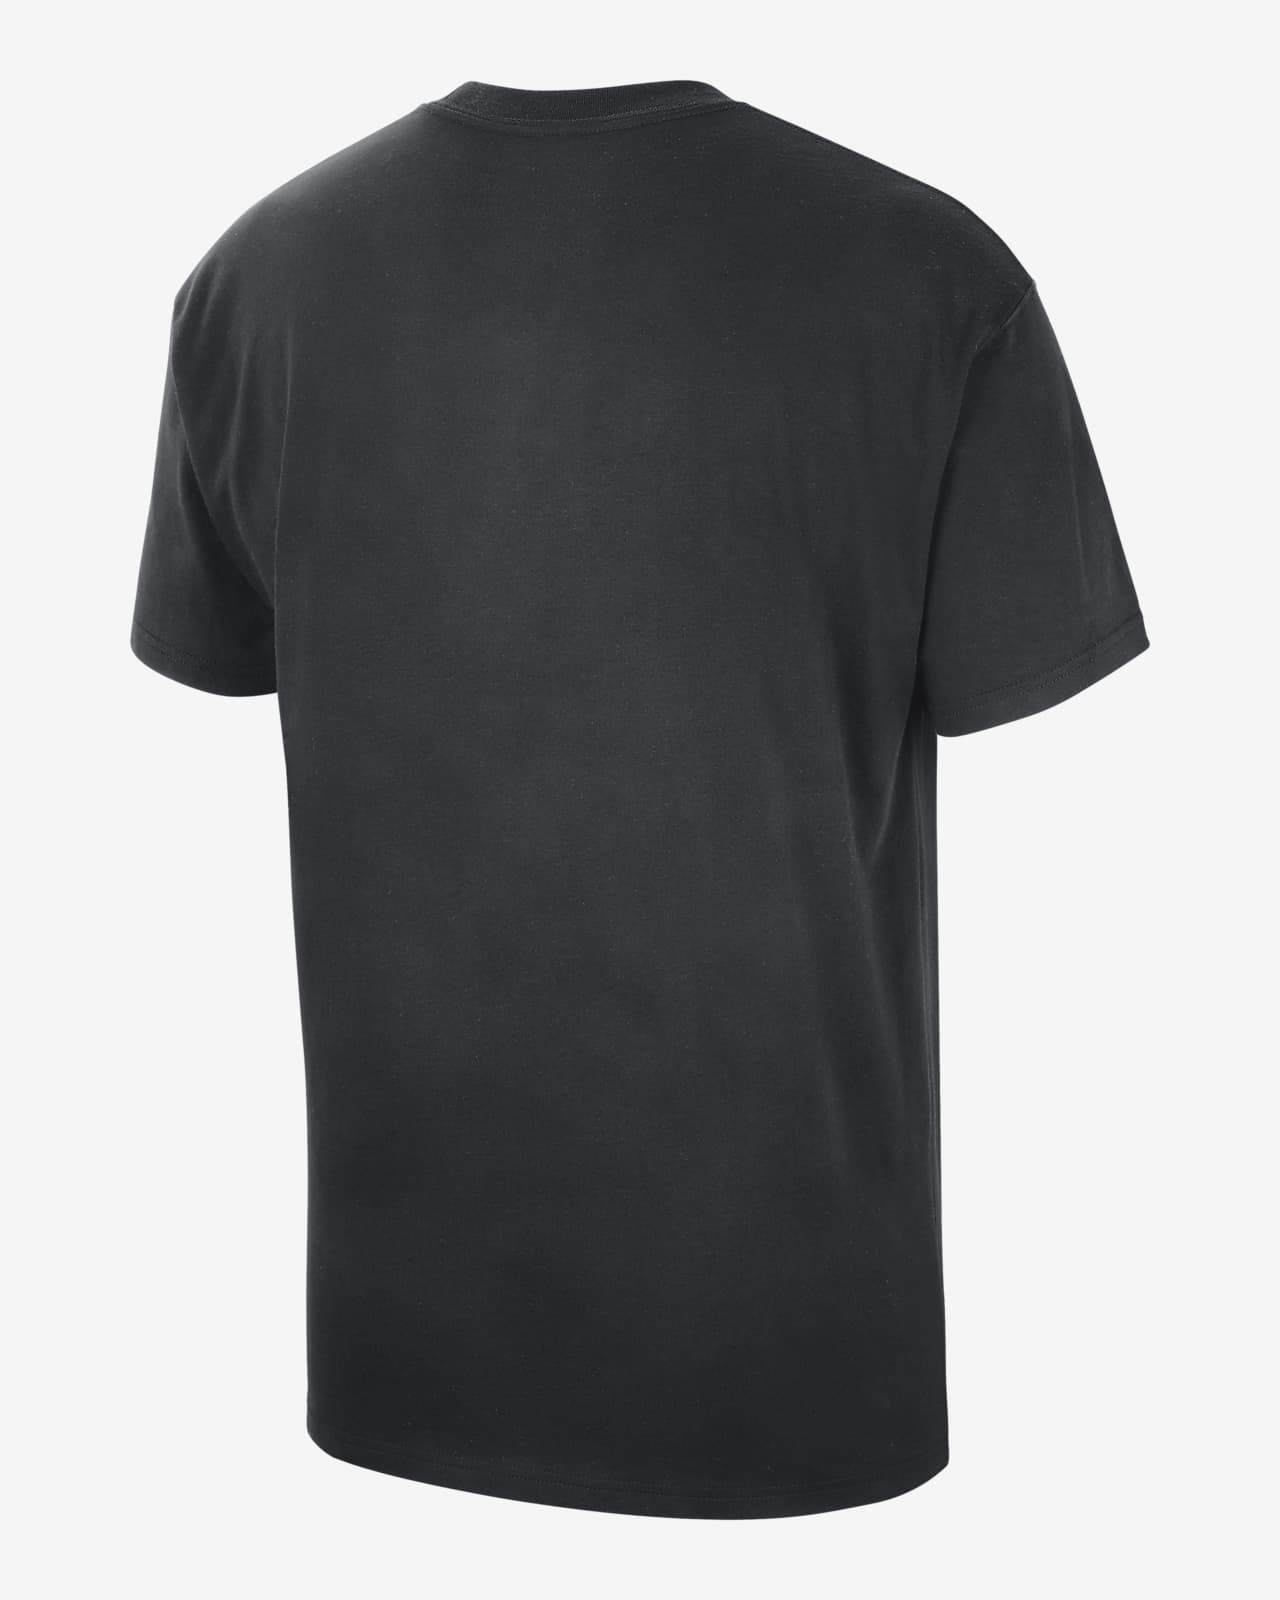 Nike, Shirts, Nike Nba Blank Black Basketball Jersey